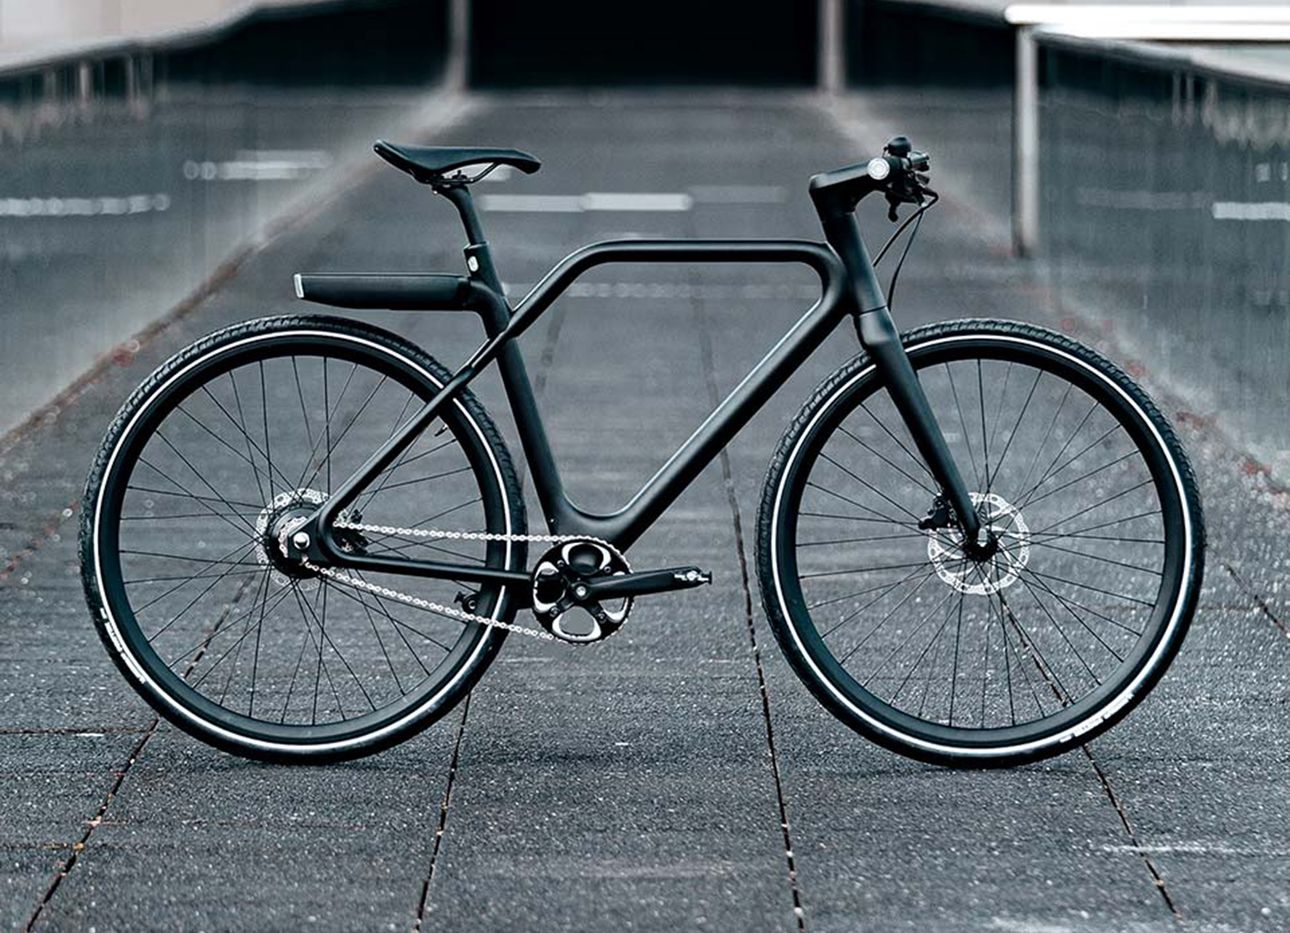 A black Angell bike on concrete in profile.